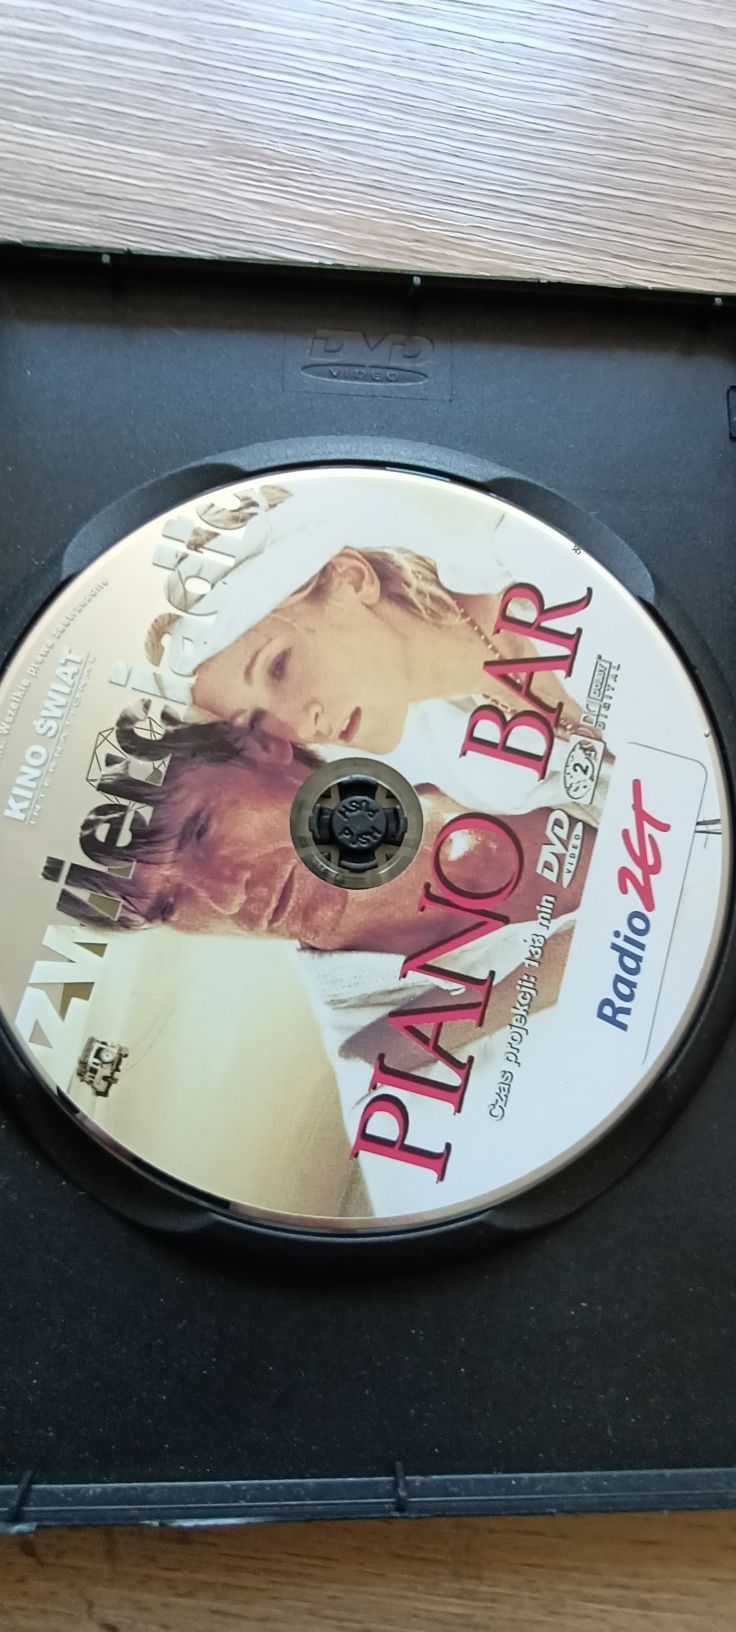 Film DVD "Piano bar"